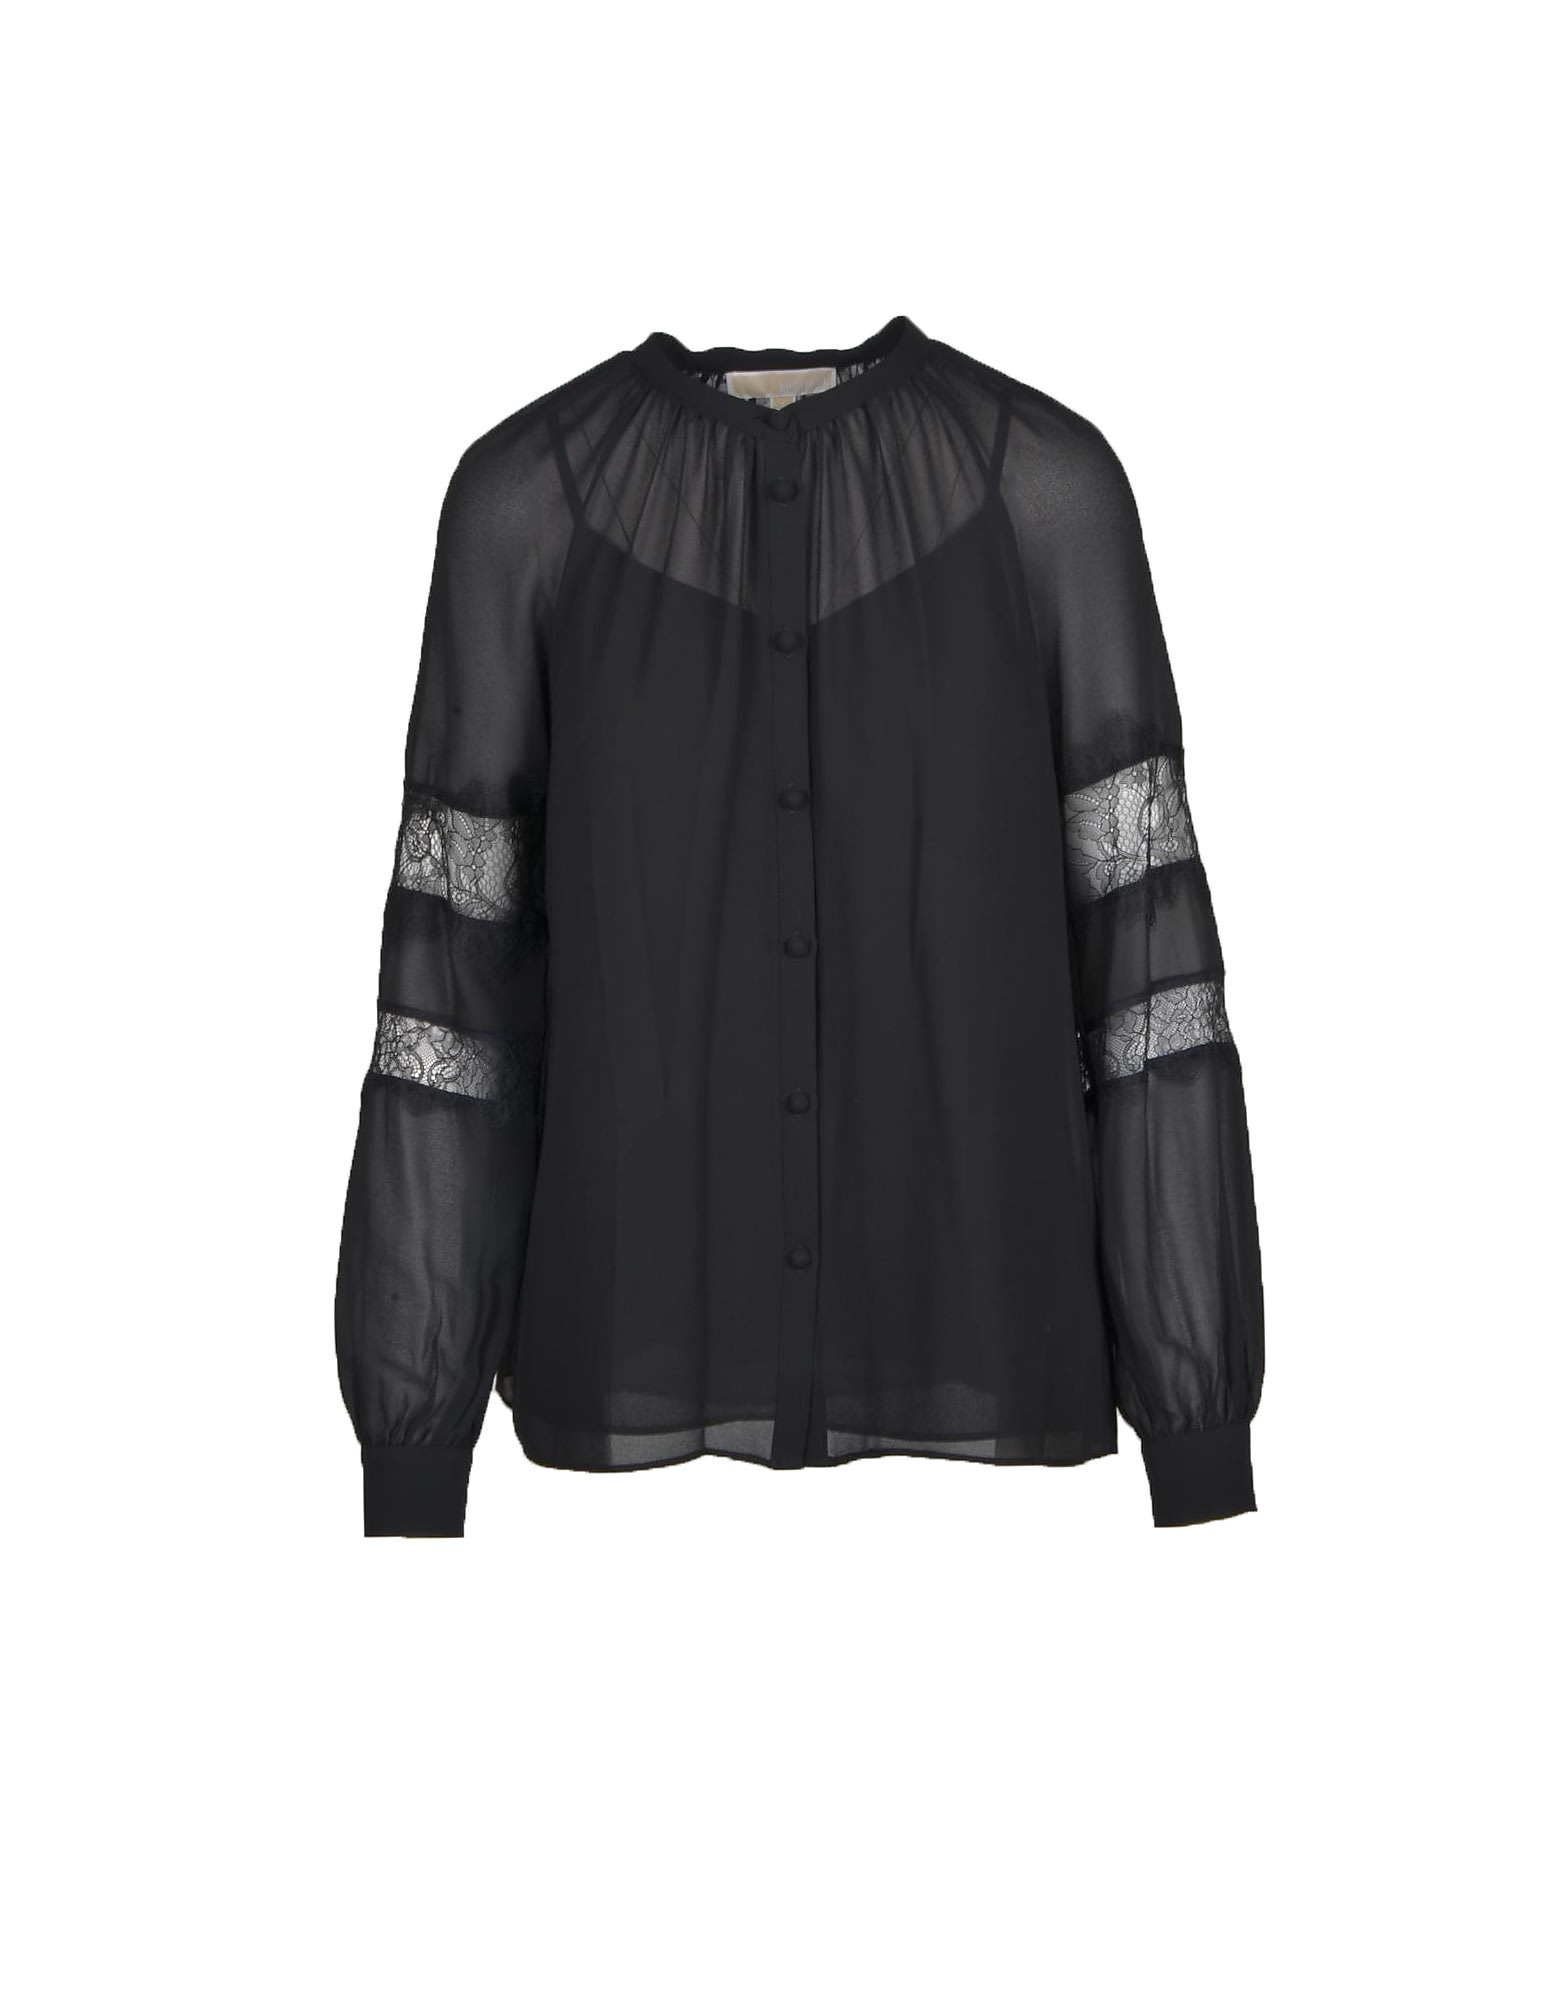 Michael Kors Womens Black Shirt